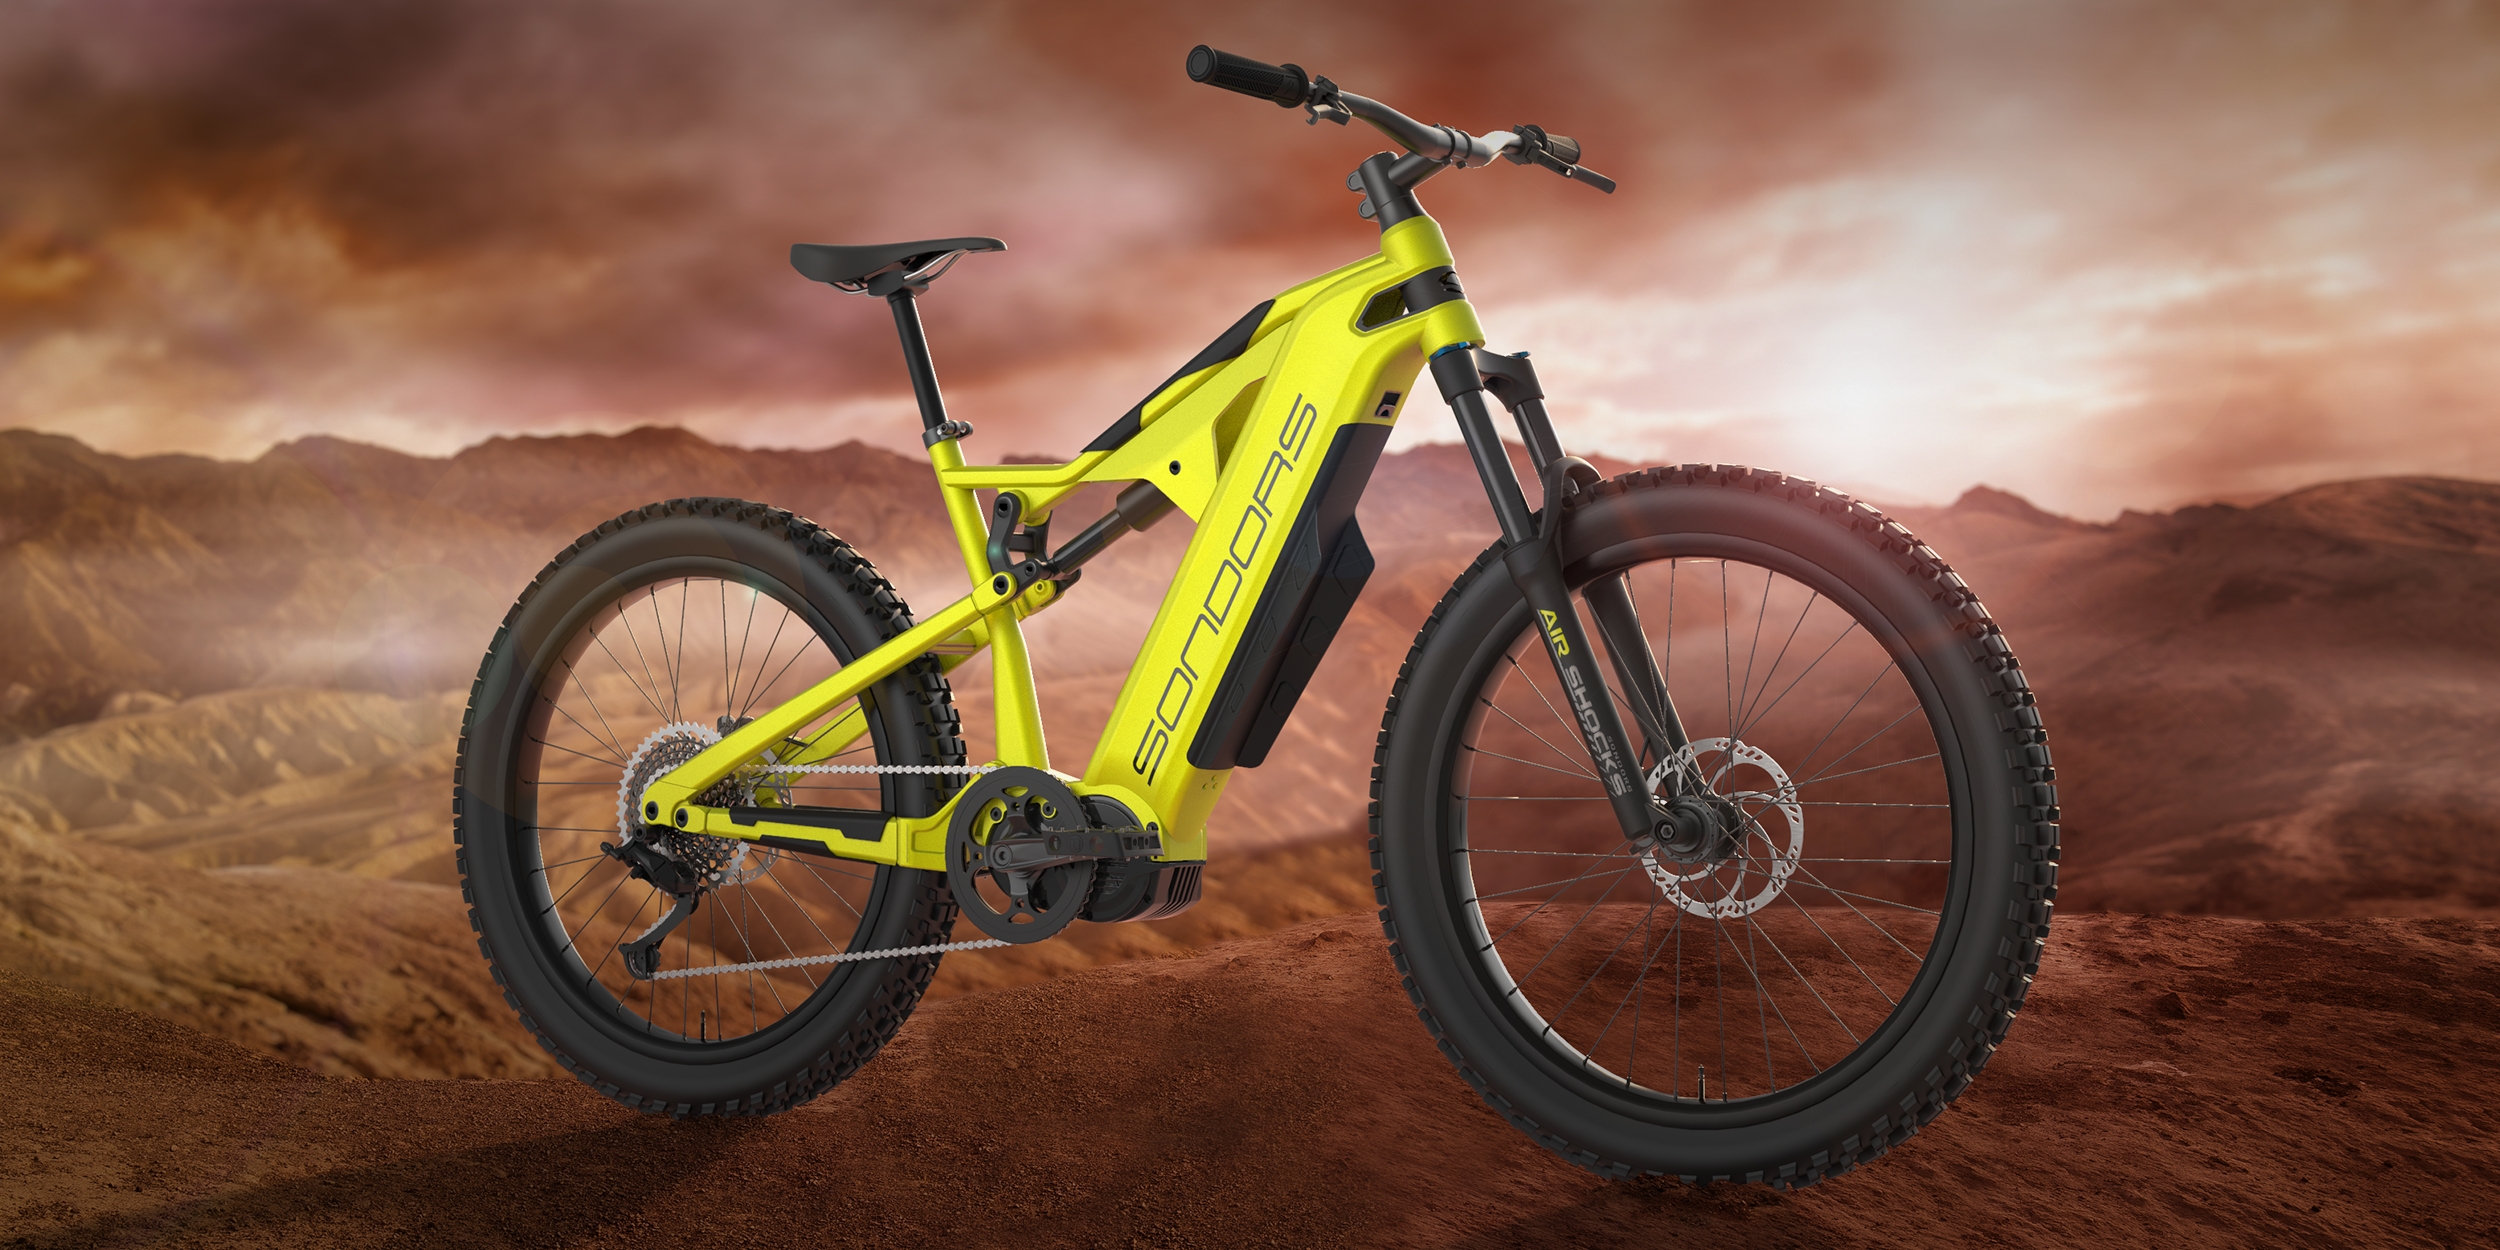 sondors electric bike review 2019